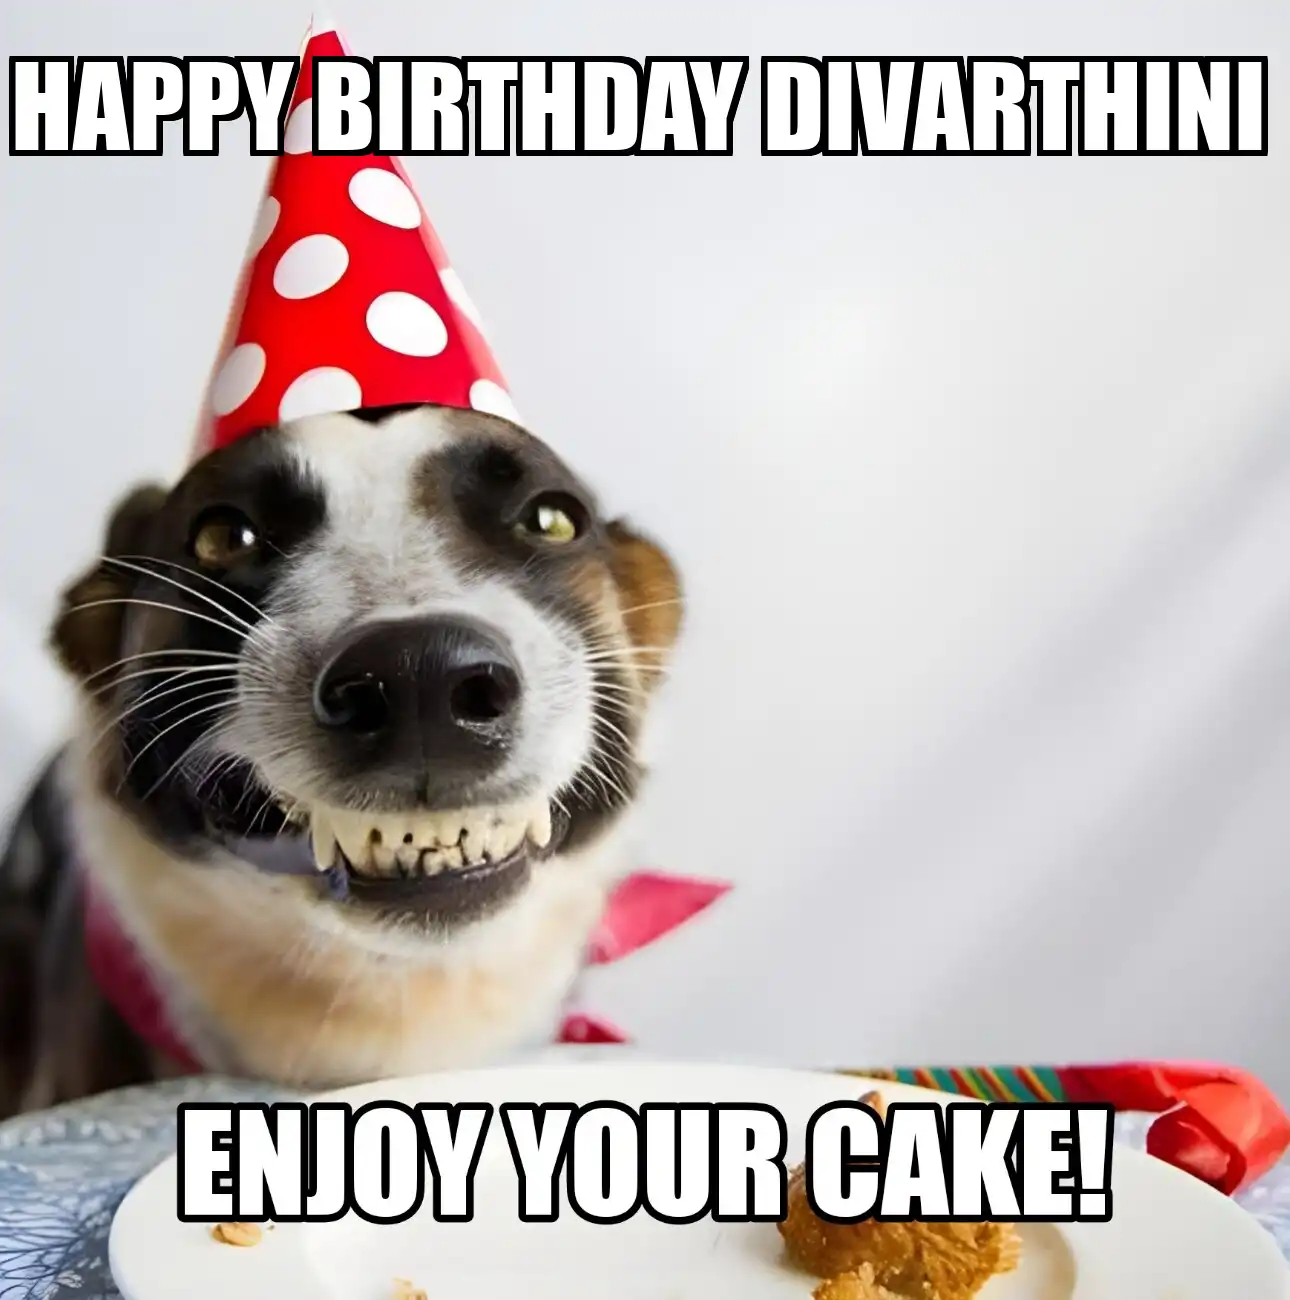 Happy Birthday Divarthini Enjoy Your Cake Dog Meme